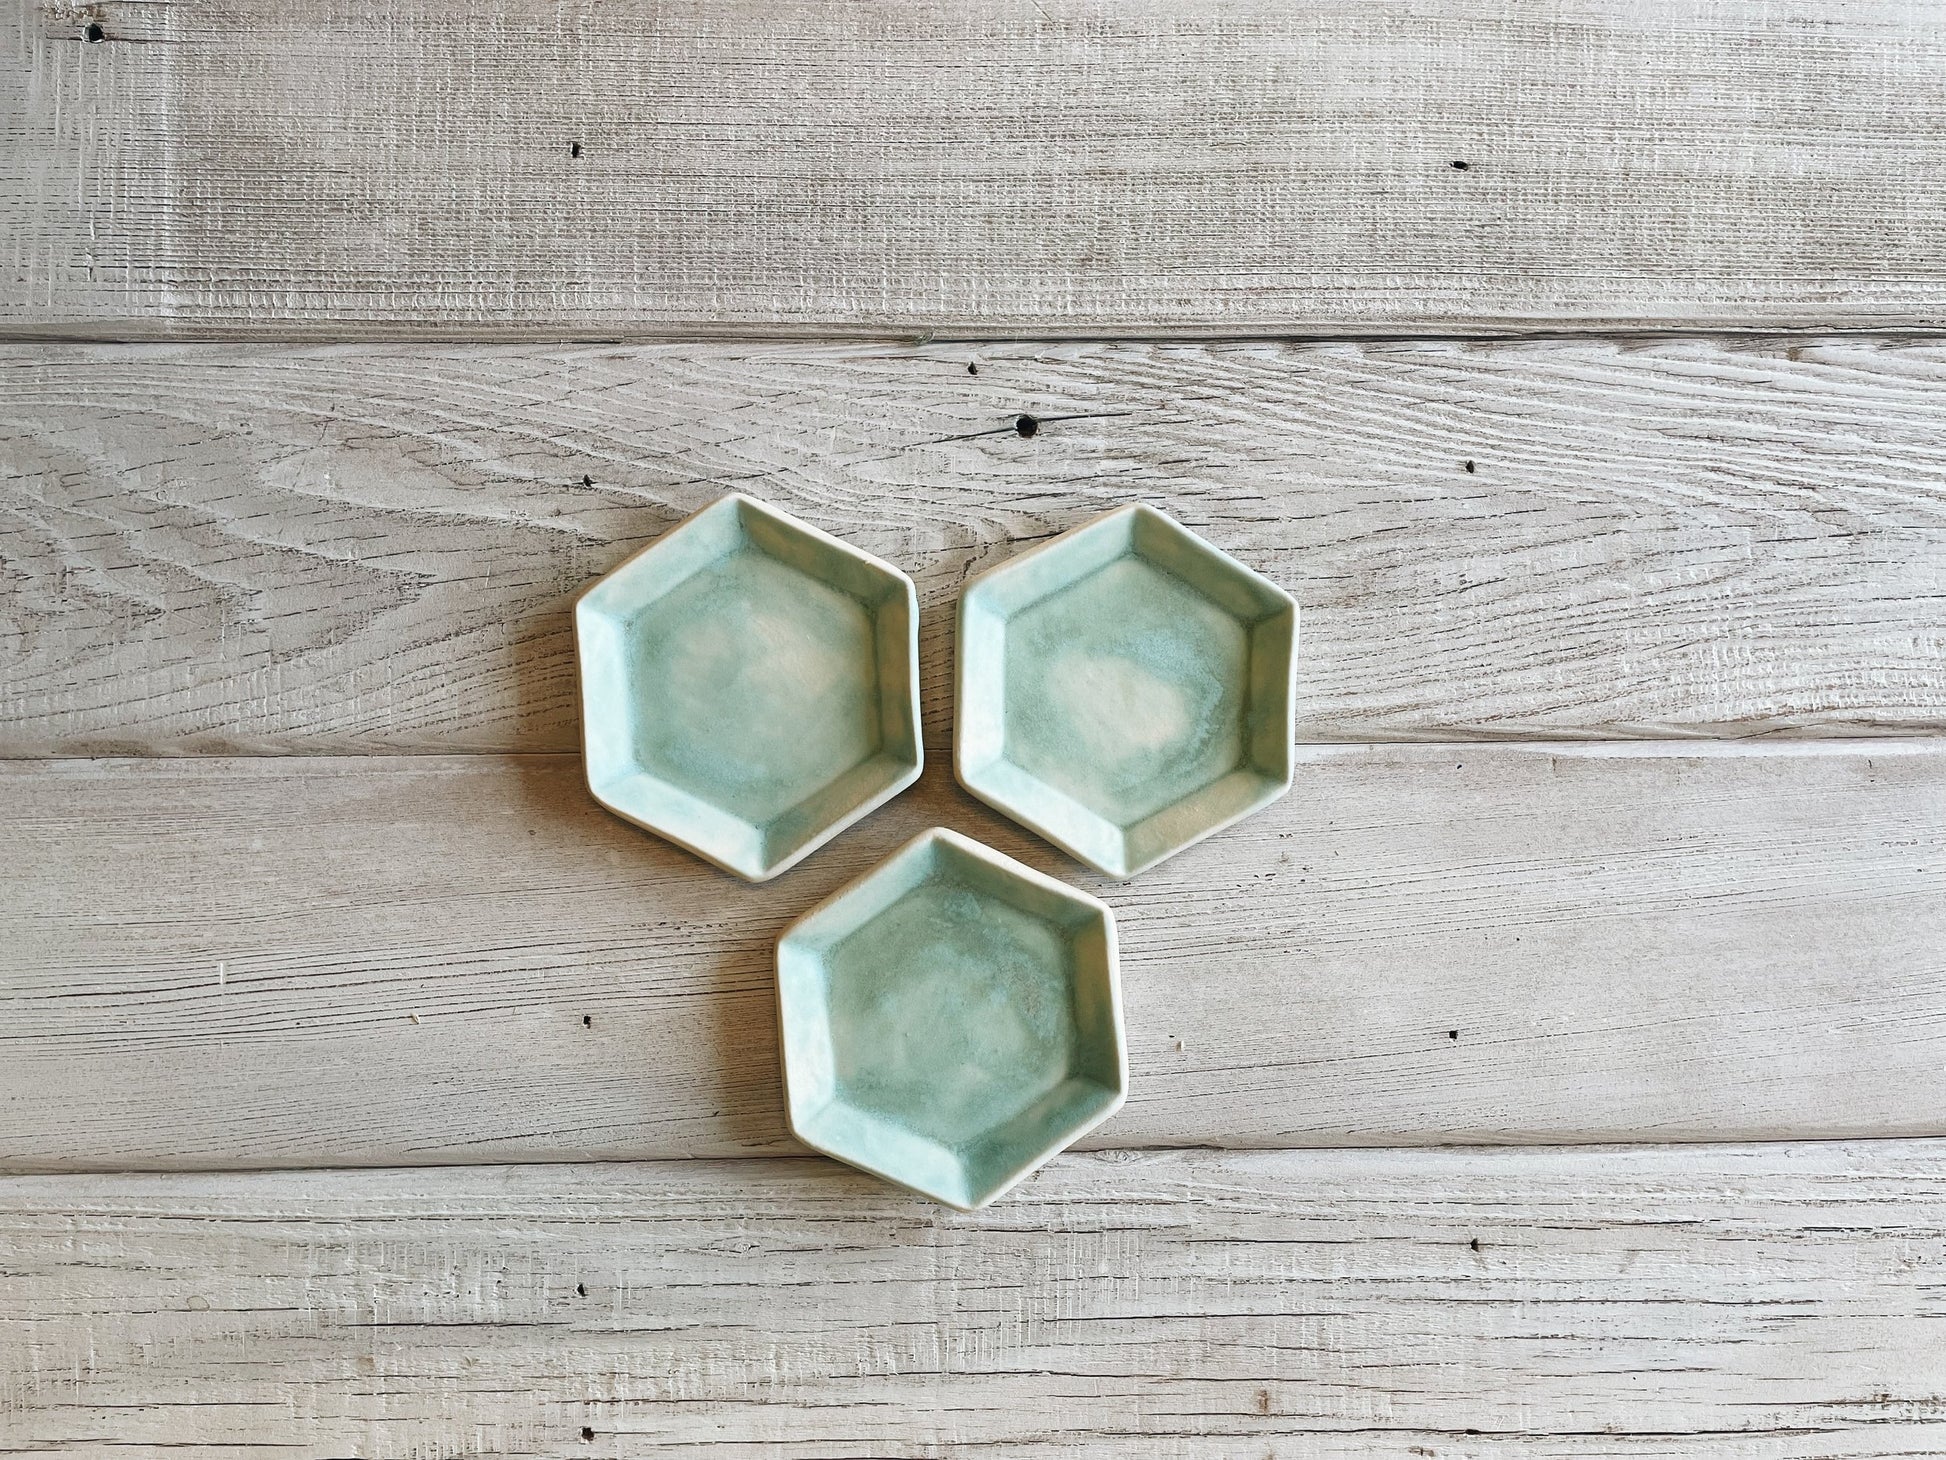 Three hexagon ceramic dishes in turquoise.